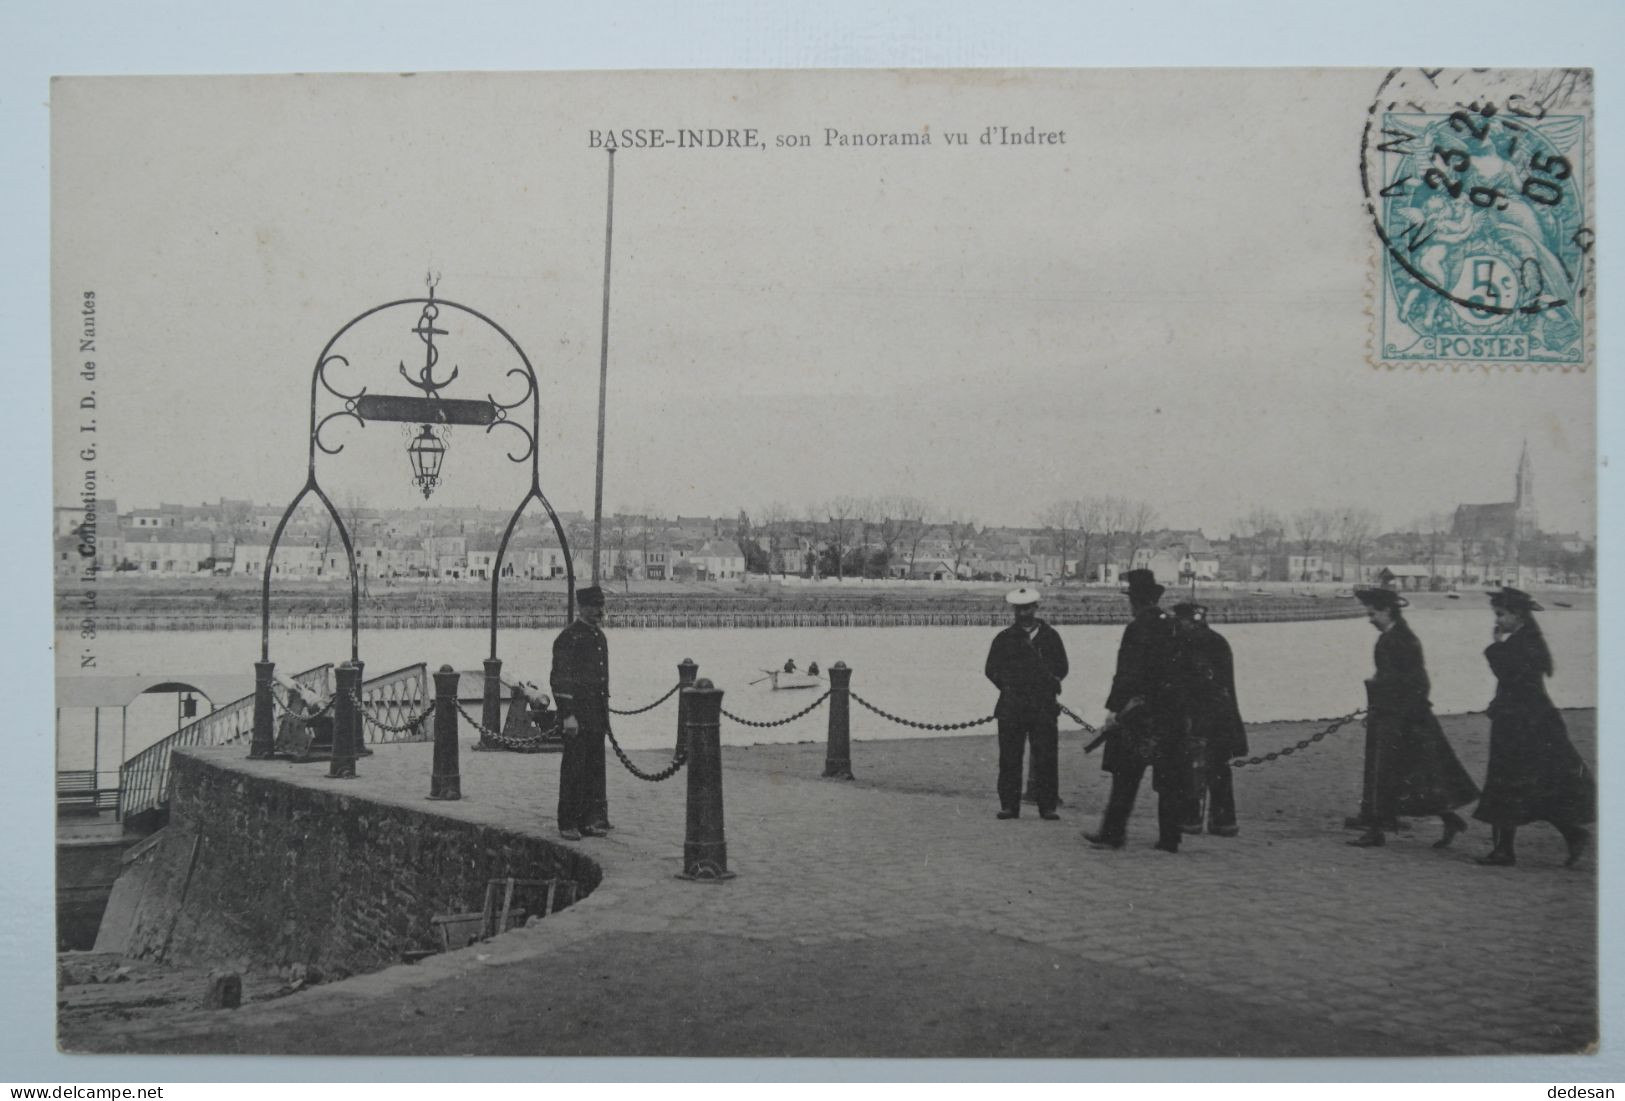 Cpa Basse Indre Son Panorama Vu D'Indret 1905 - NOU32 - Basse-Indre